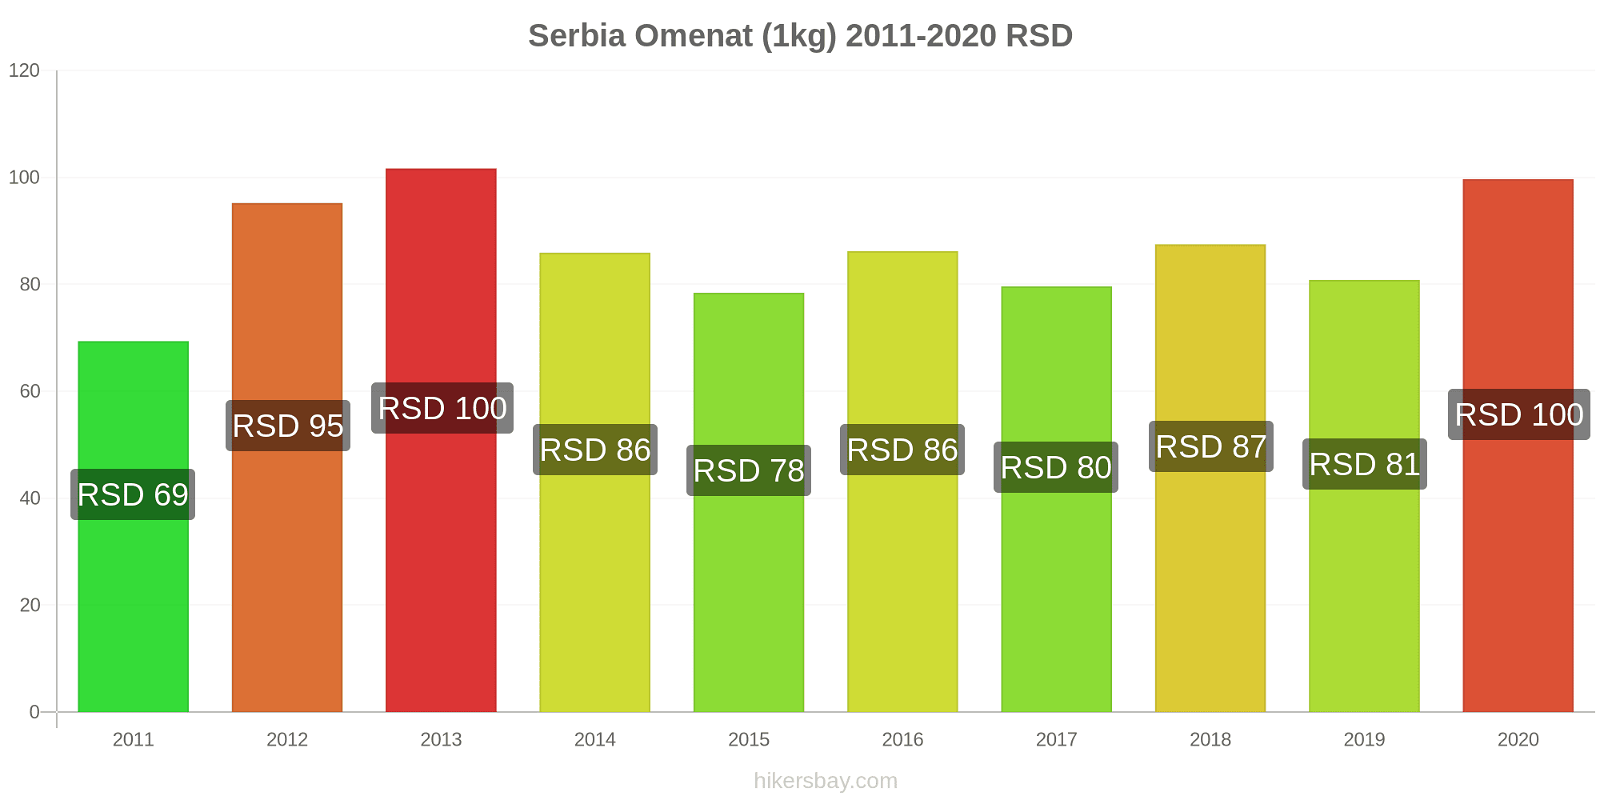 Serbia hintojen muutokset Omenat (1kg) hikersbay.com